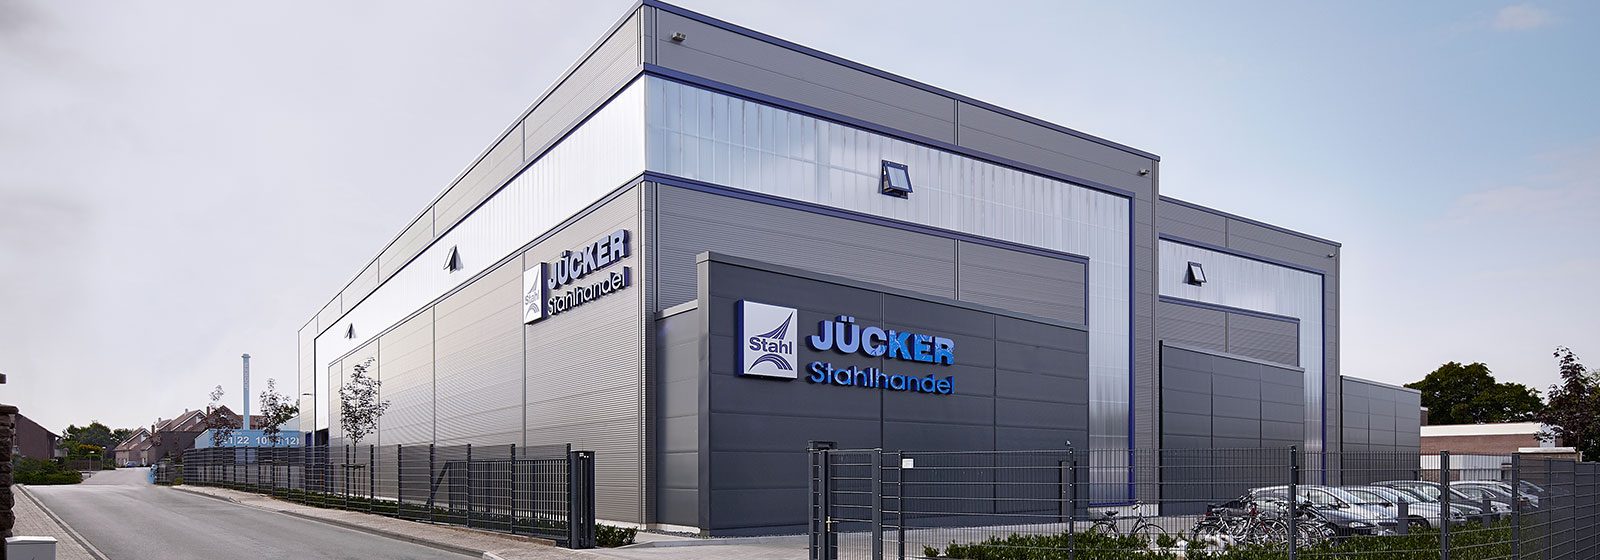 Bilder Jücker GmbH & Co. Stahlhandels KG